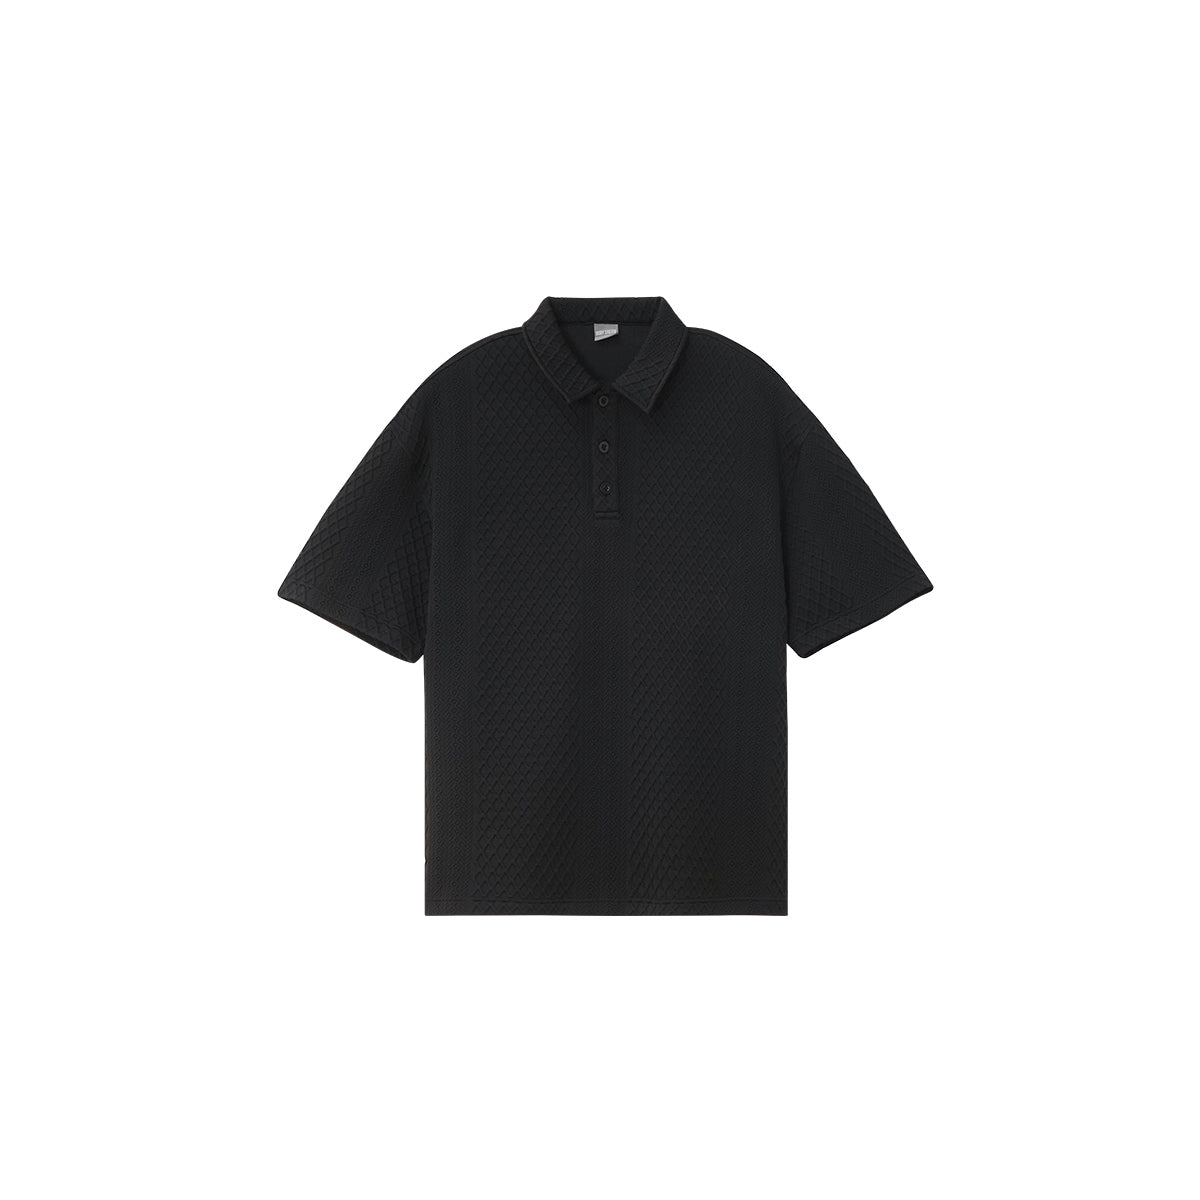 Irregular Jacquard Texture Knitted Black Short-sleeve Polo Shirt - 0cm